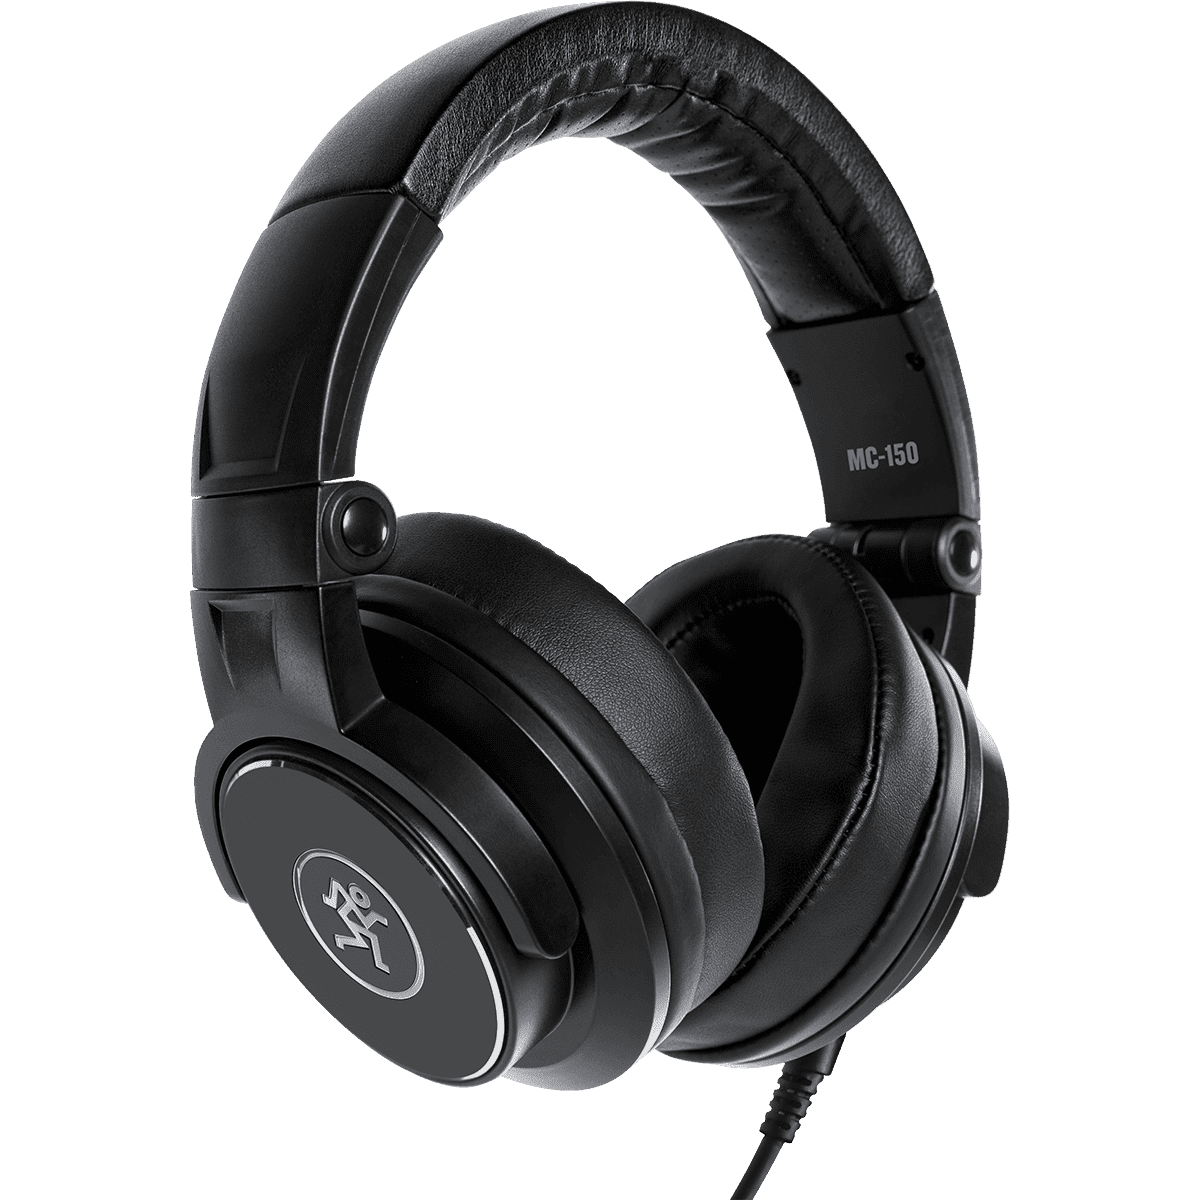 Mackie MC 150 Over Ear Headphones